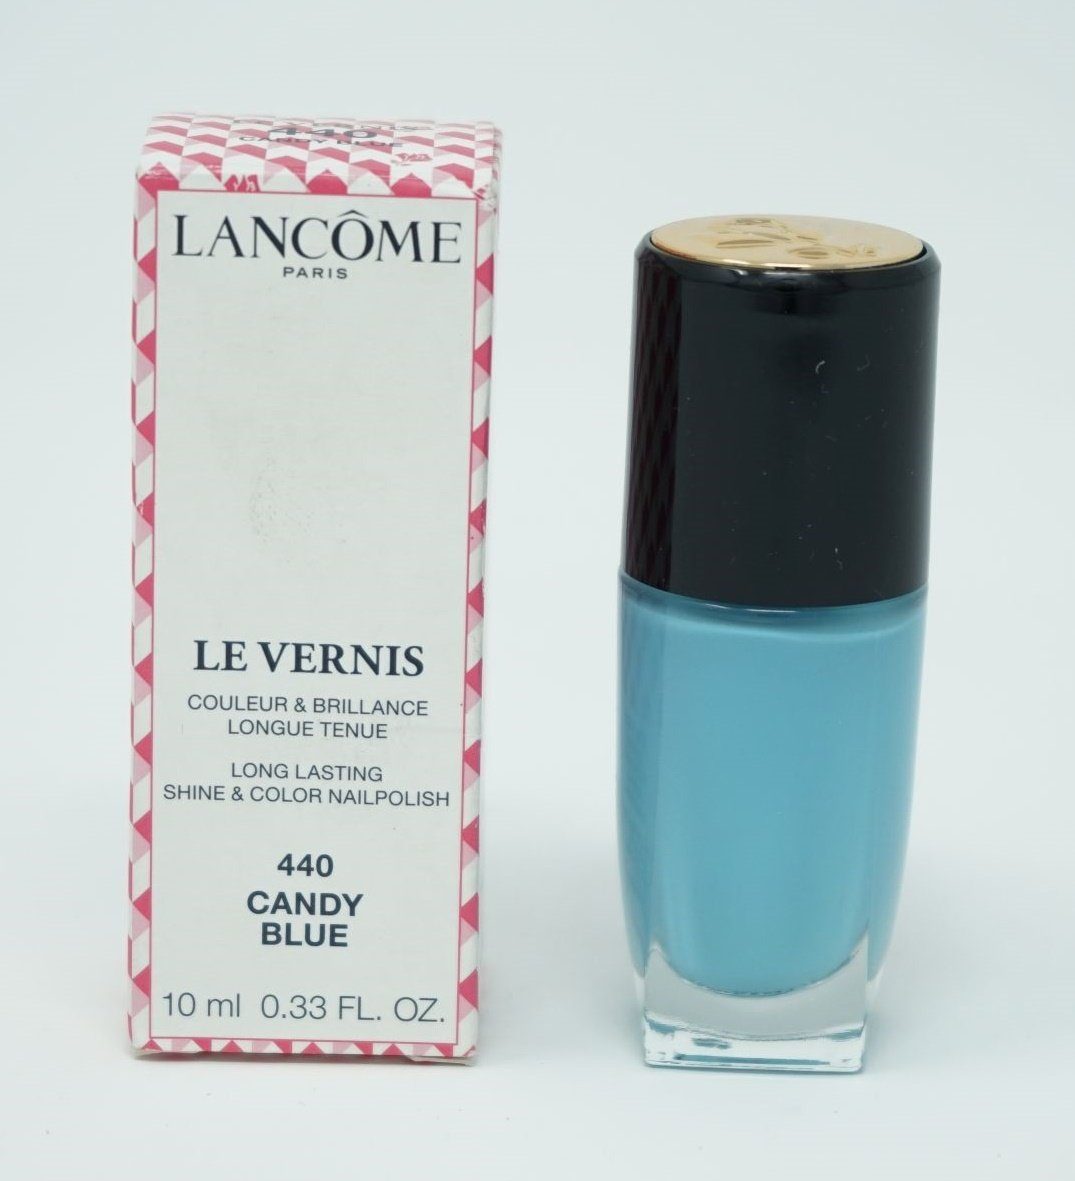 LANCOME Nagellack Lancome Le Vernis Nagellack long lasting 10ml 440 Candy Blue | Nagellacke